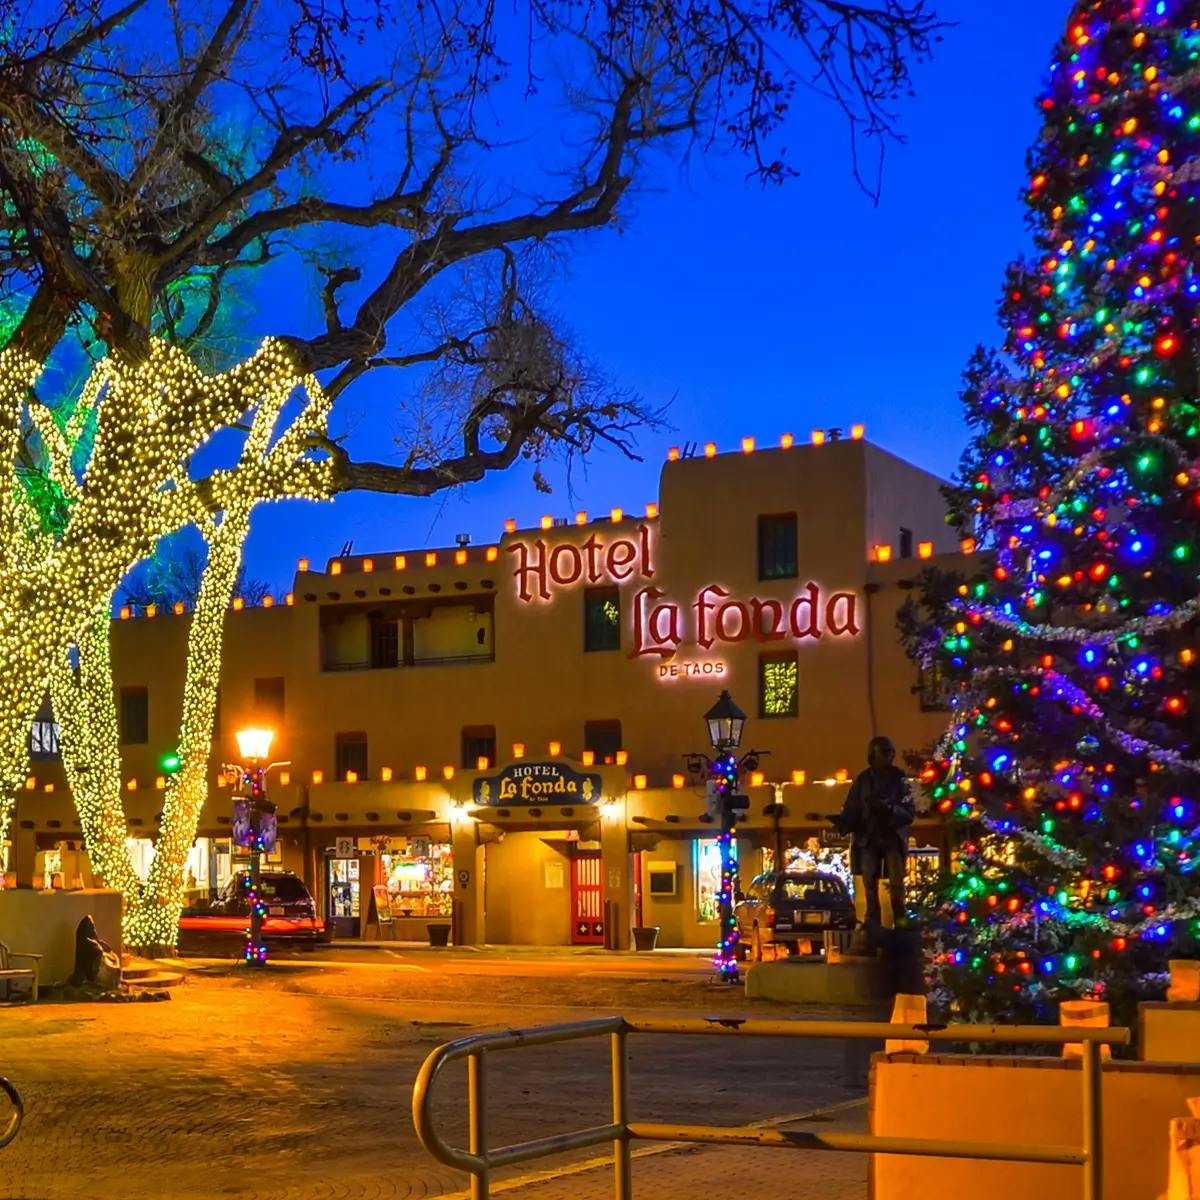 Beautiful holiday decorations at Taos, New Mexico Plaza with the famous La Fonda Hotel.